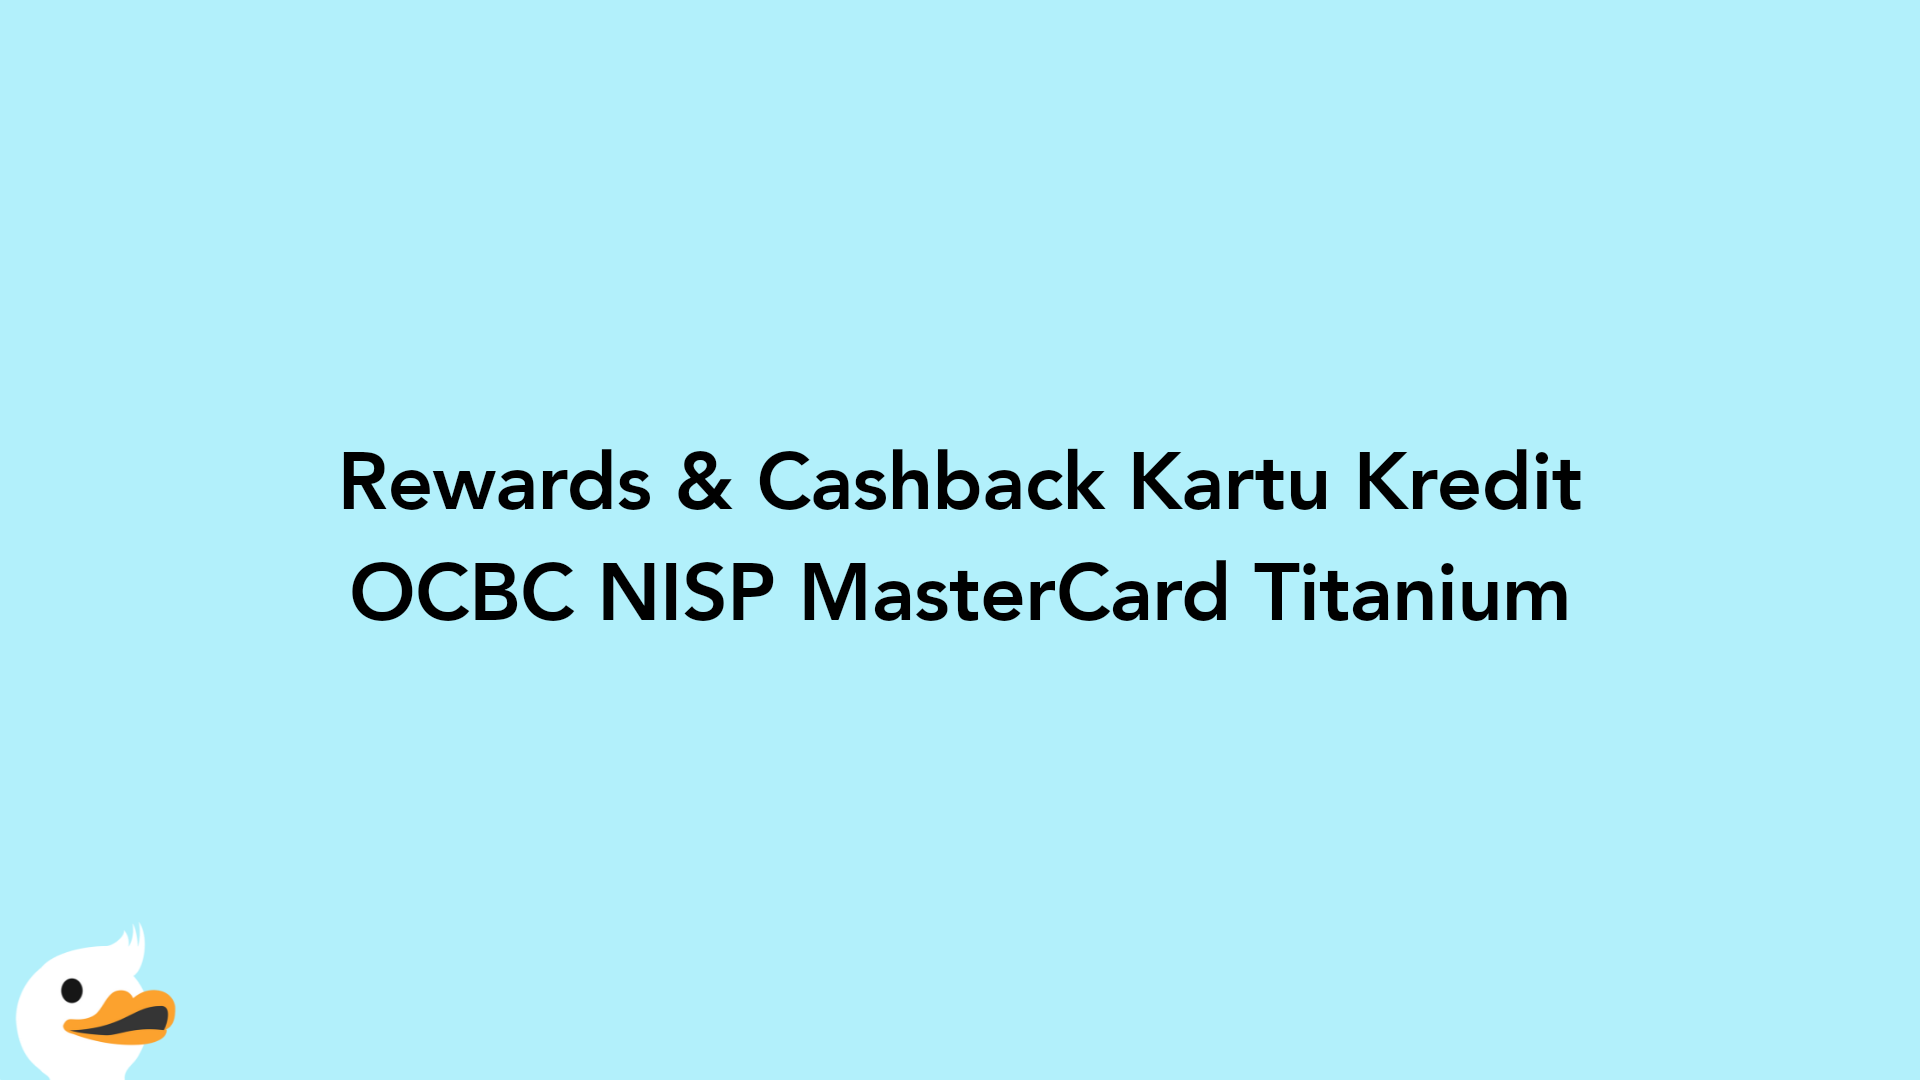 Rewards & Cashback Kartu Kredit OCBC NISP MasterCard Titanium